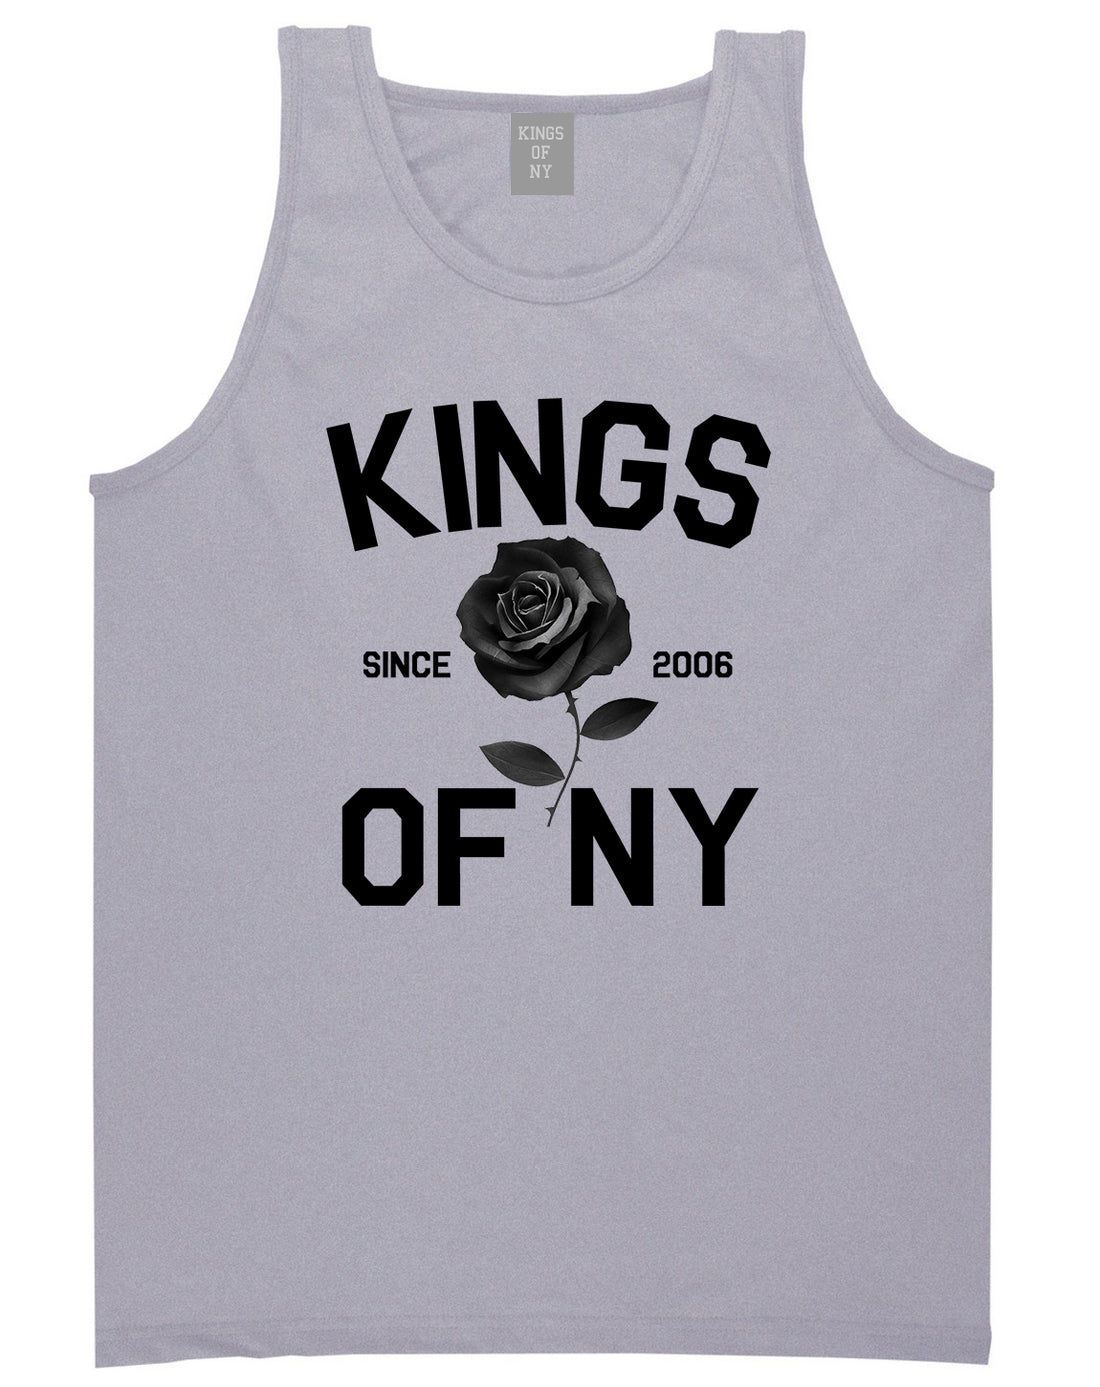 Black Rose Since 2006 Mens Tank Top Shirt Grey by Kings Of NY